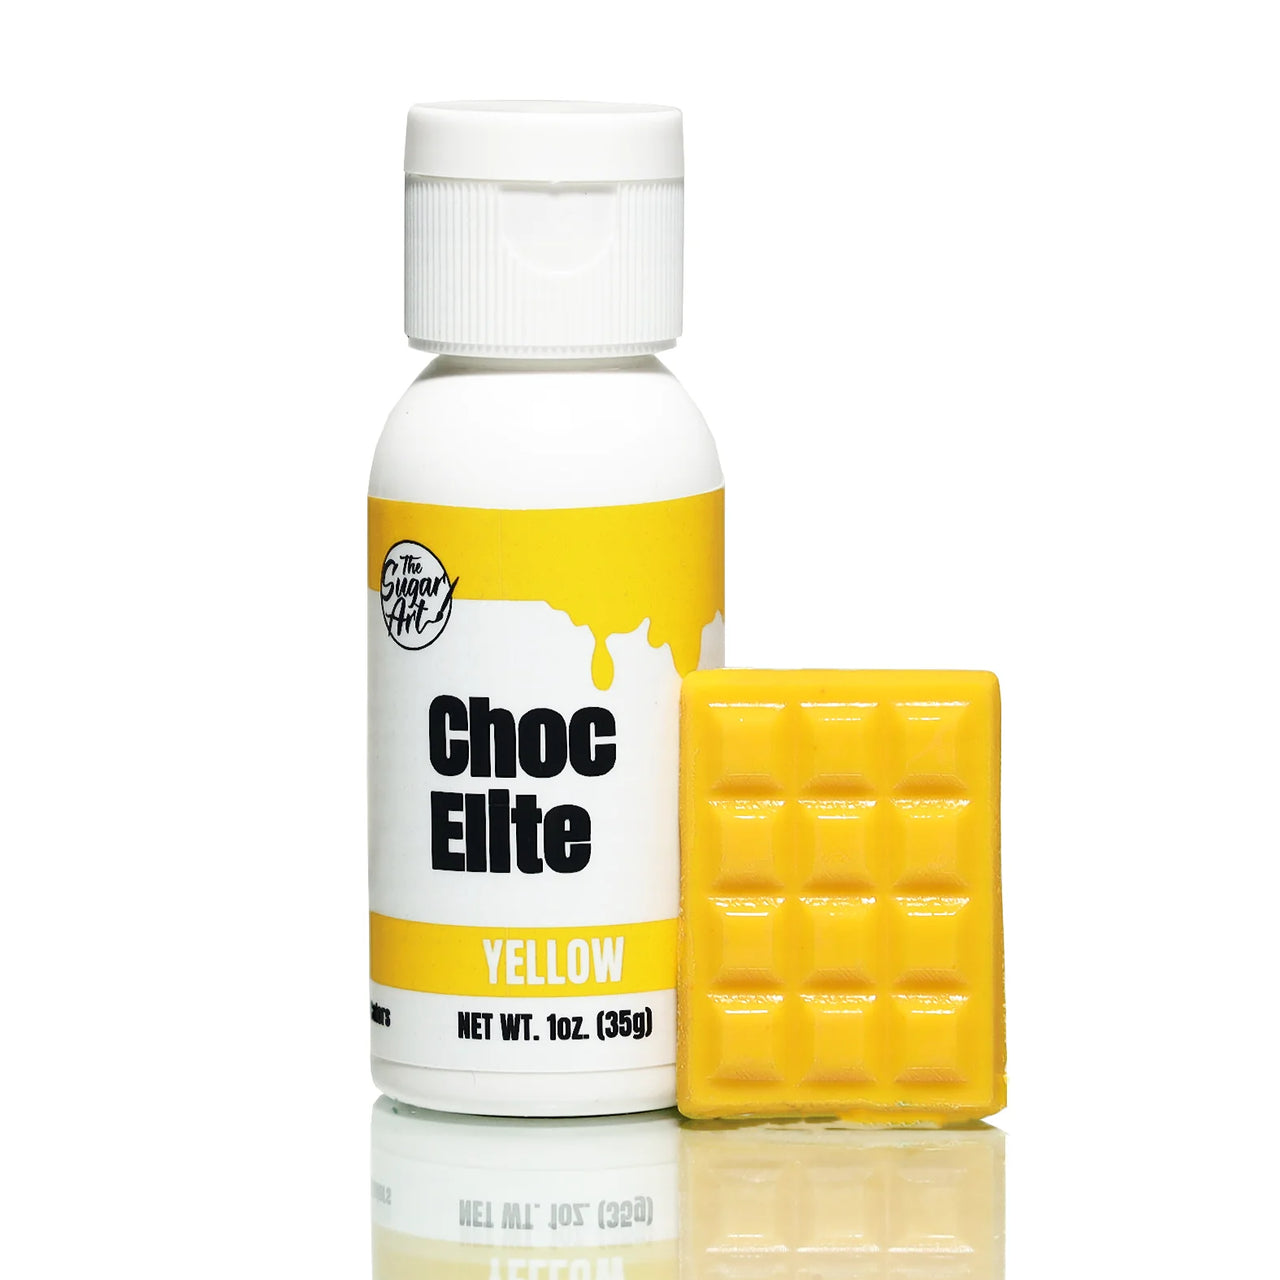 Yellow Choc Elite 1oz (35g)